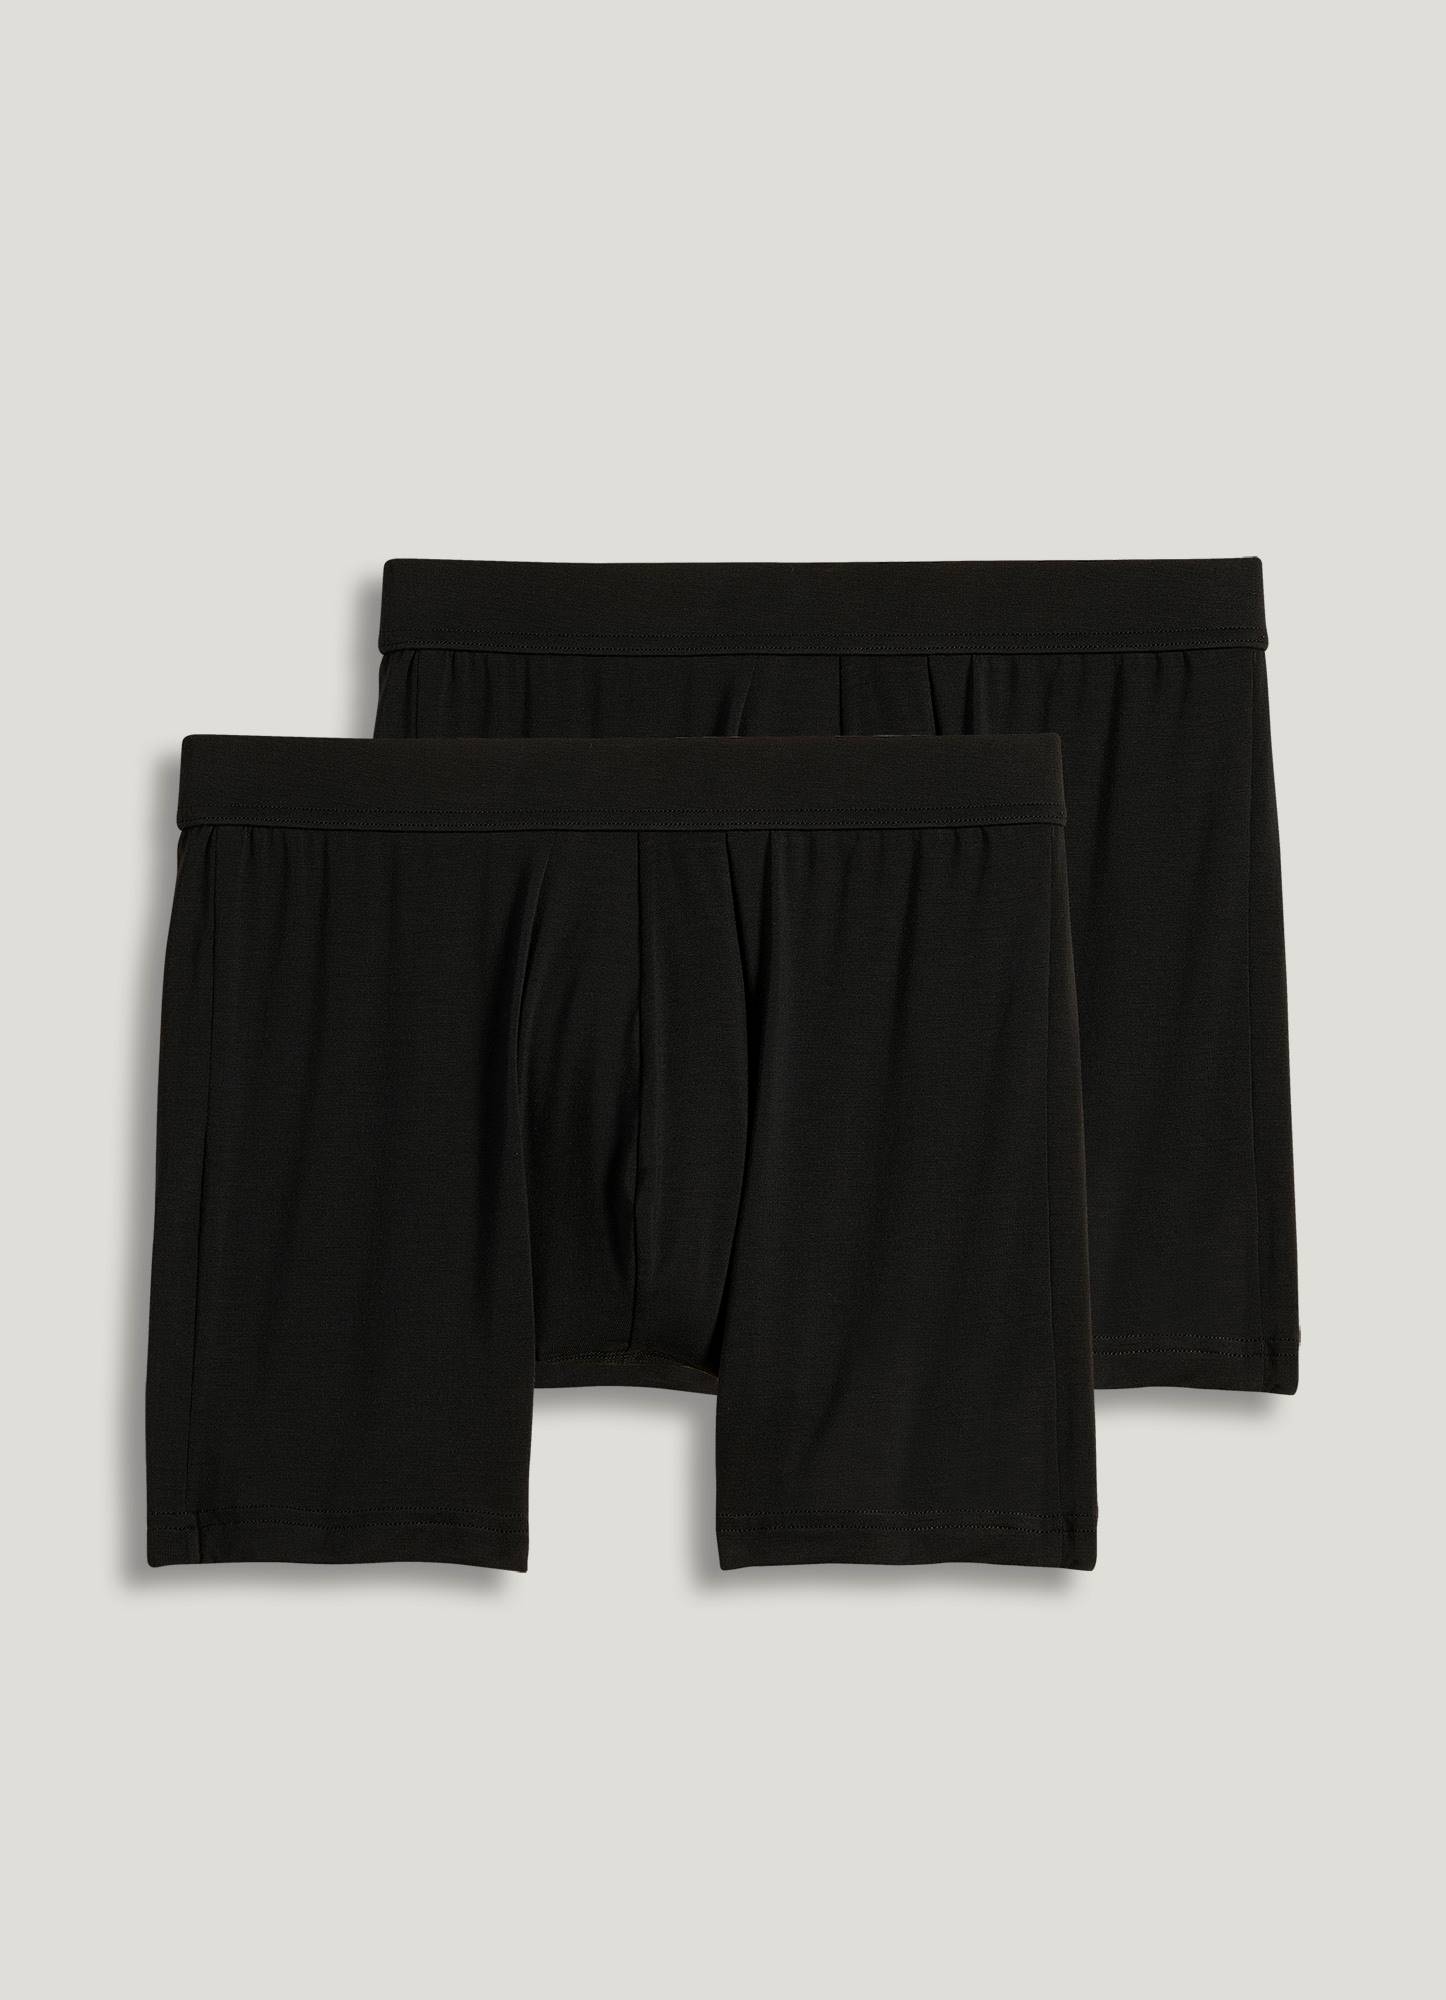 Jockey Modal Brief, Black - Underwear